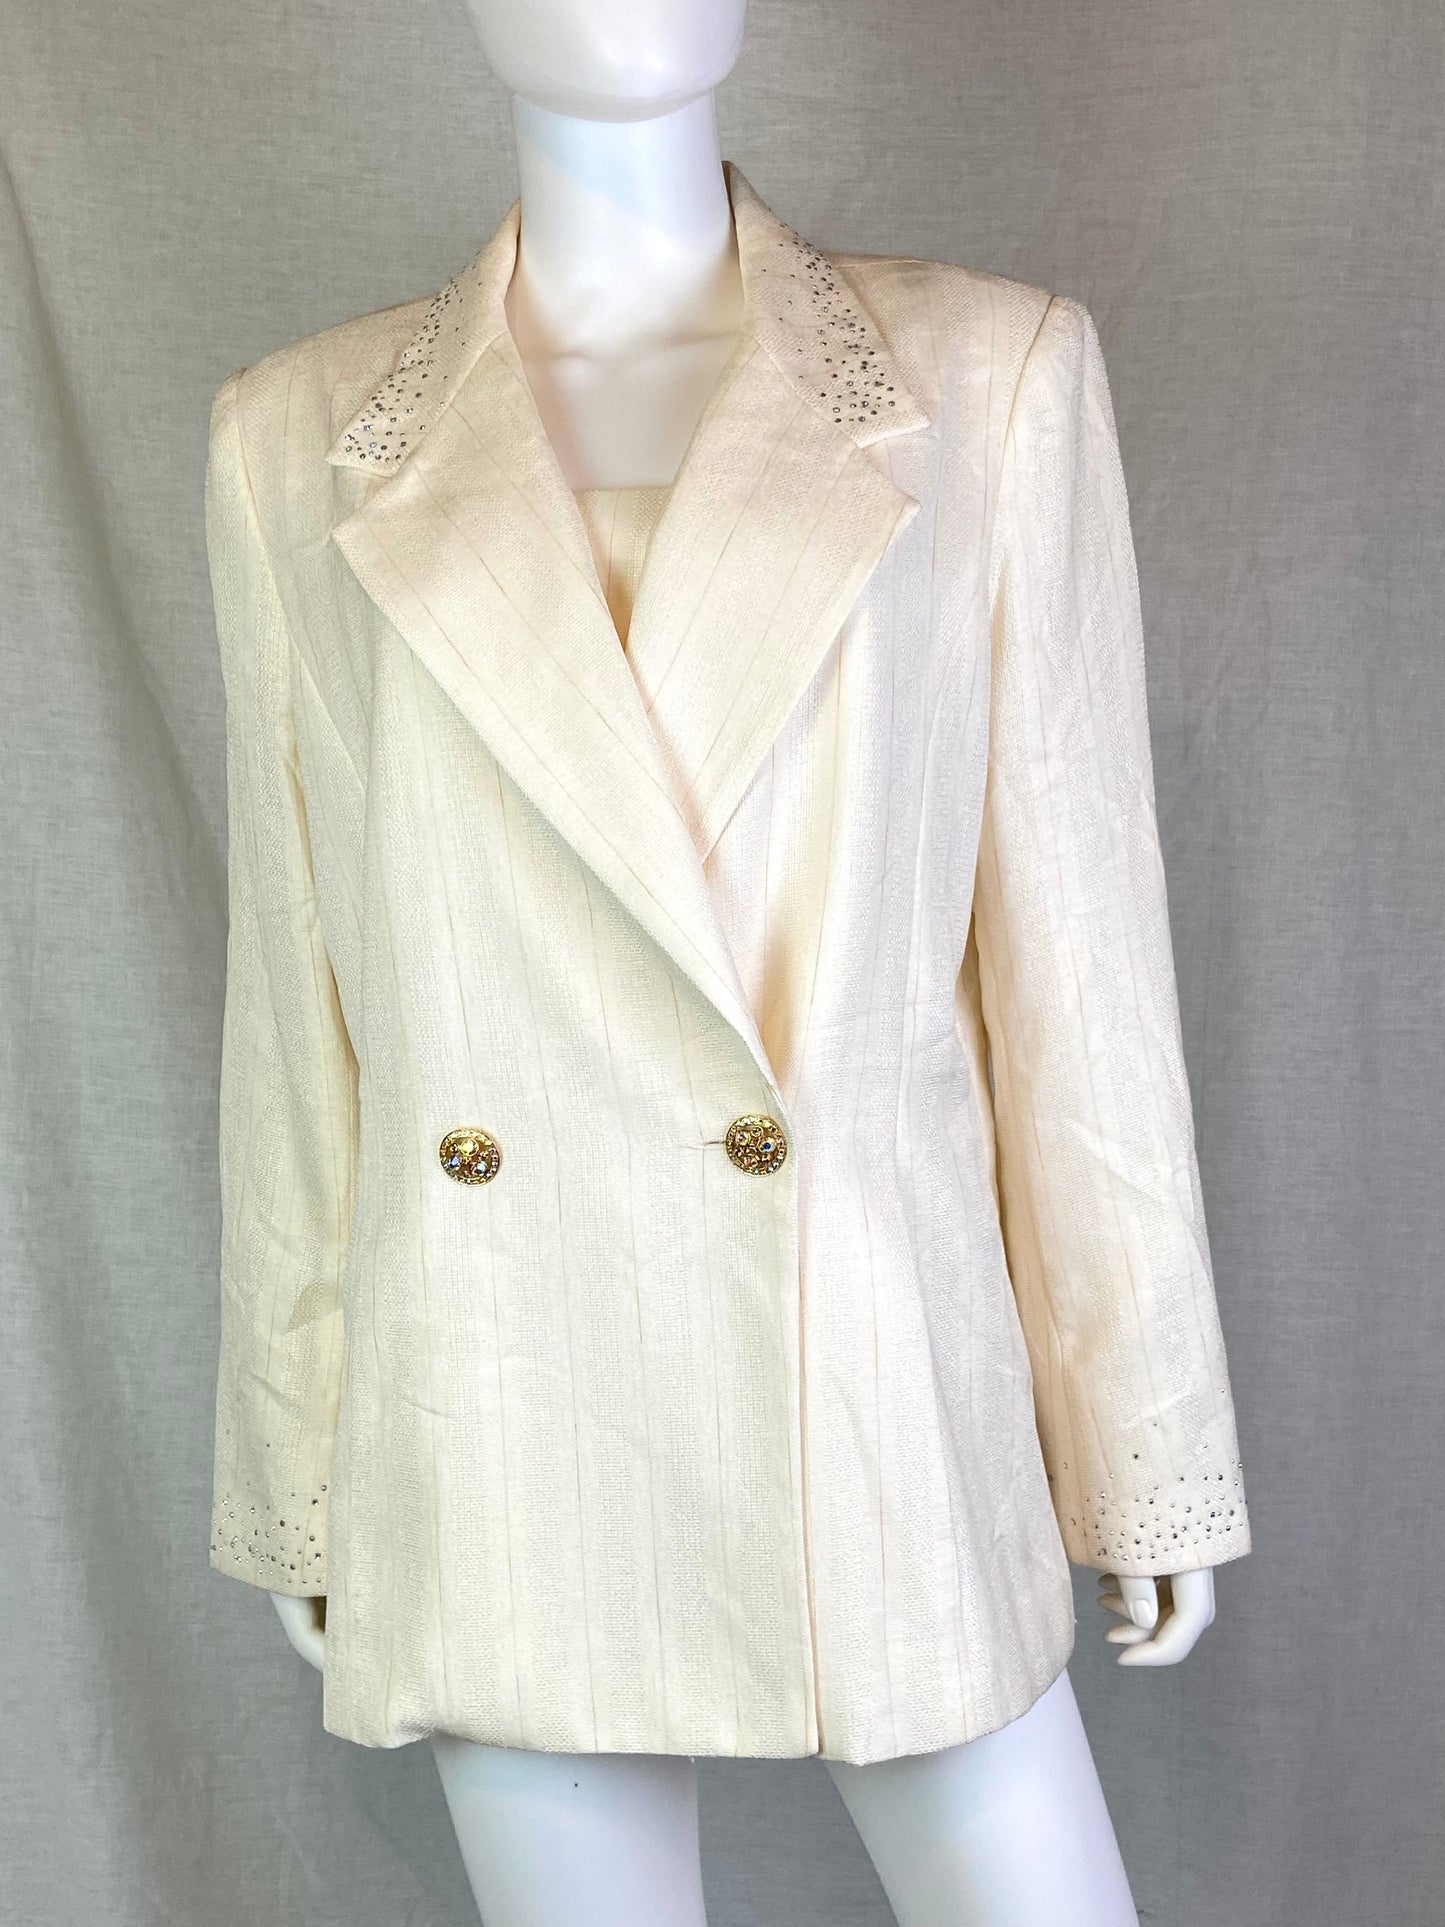 Lily & Taylor Cream White Striped Rhinestone Blazer Jacket